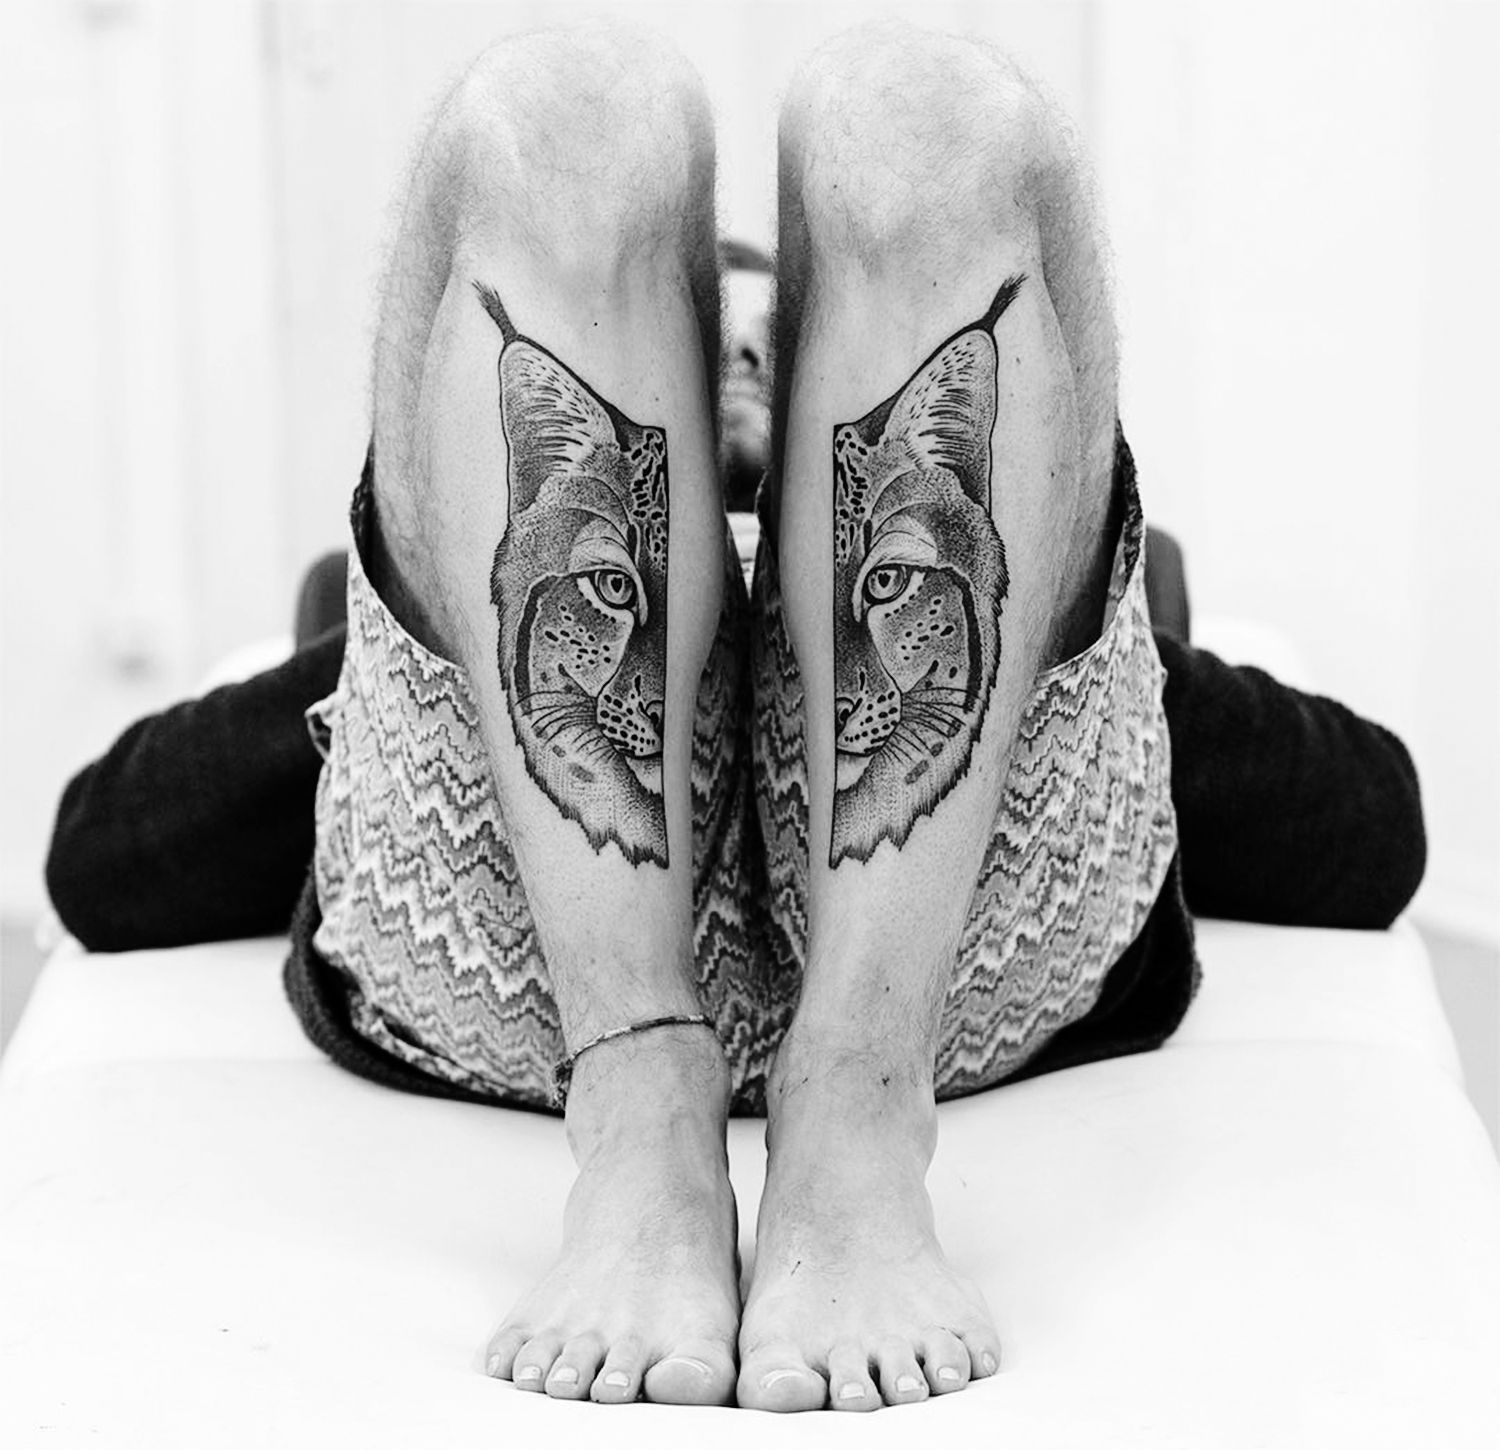 linx tattoo on legs, doubleup by valentin hirsch